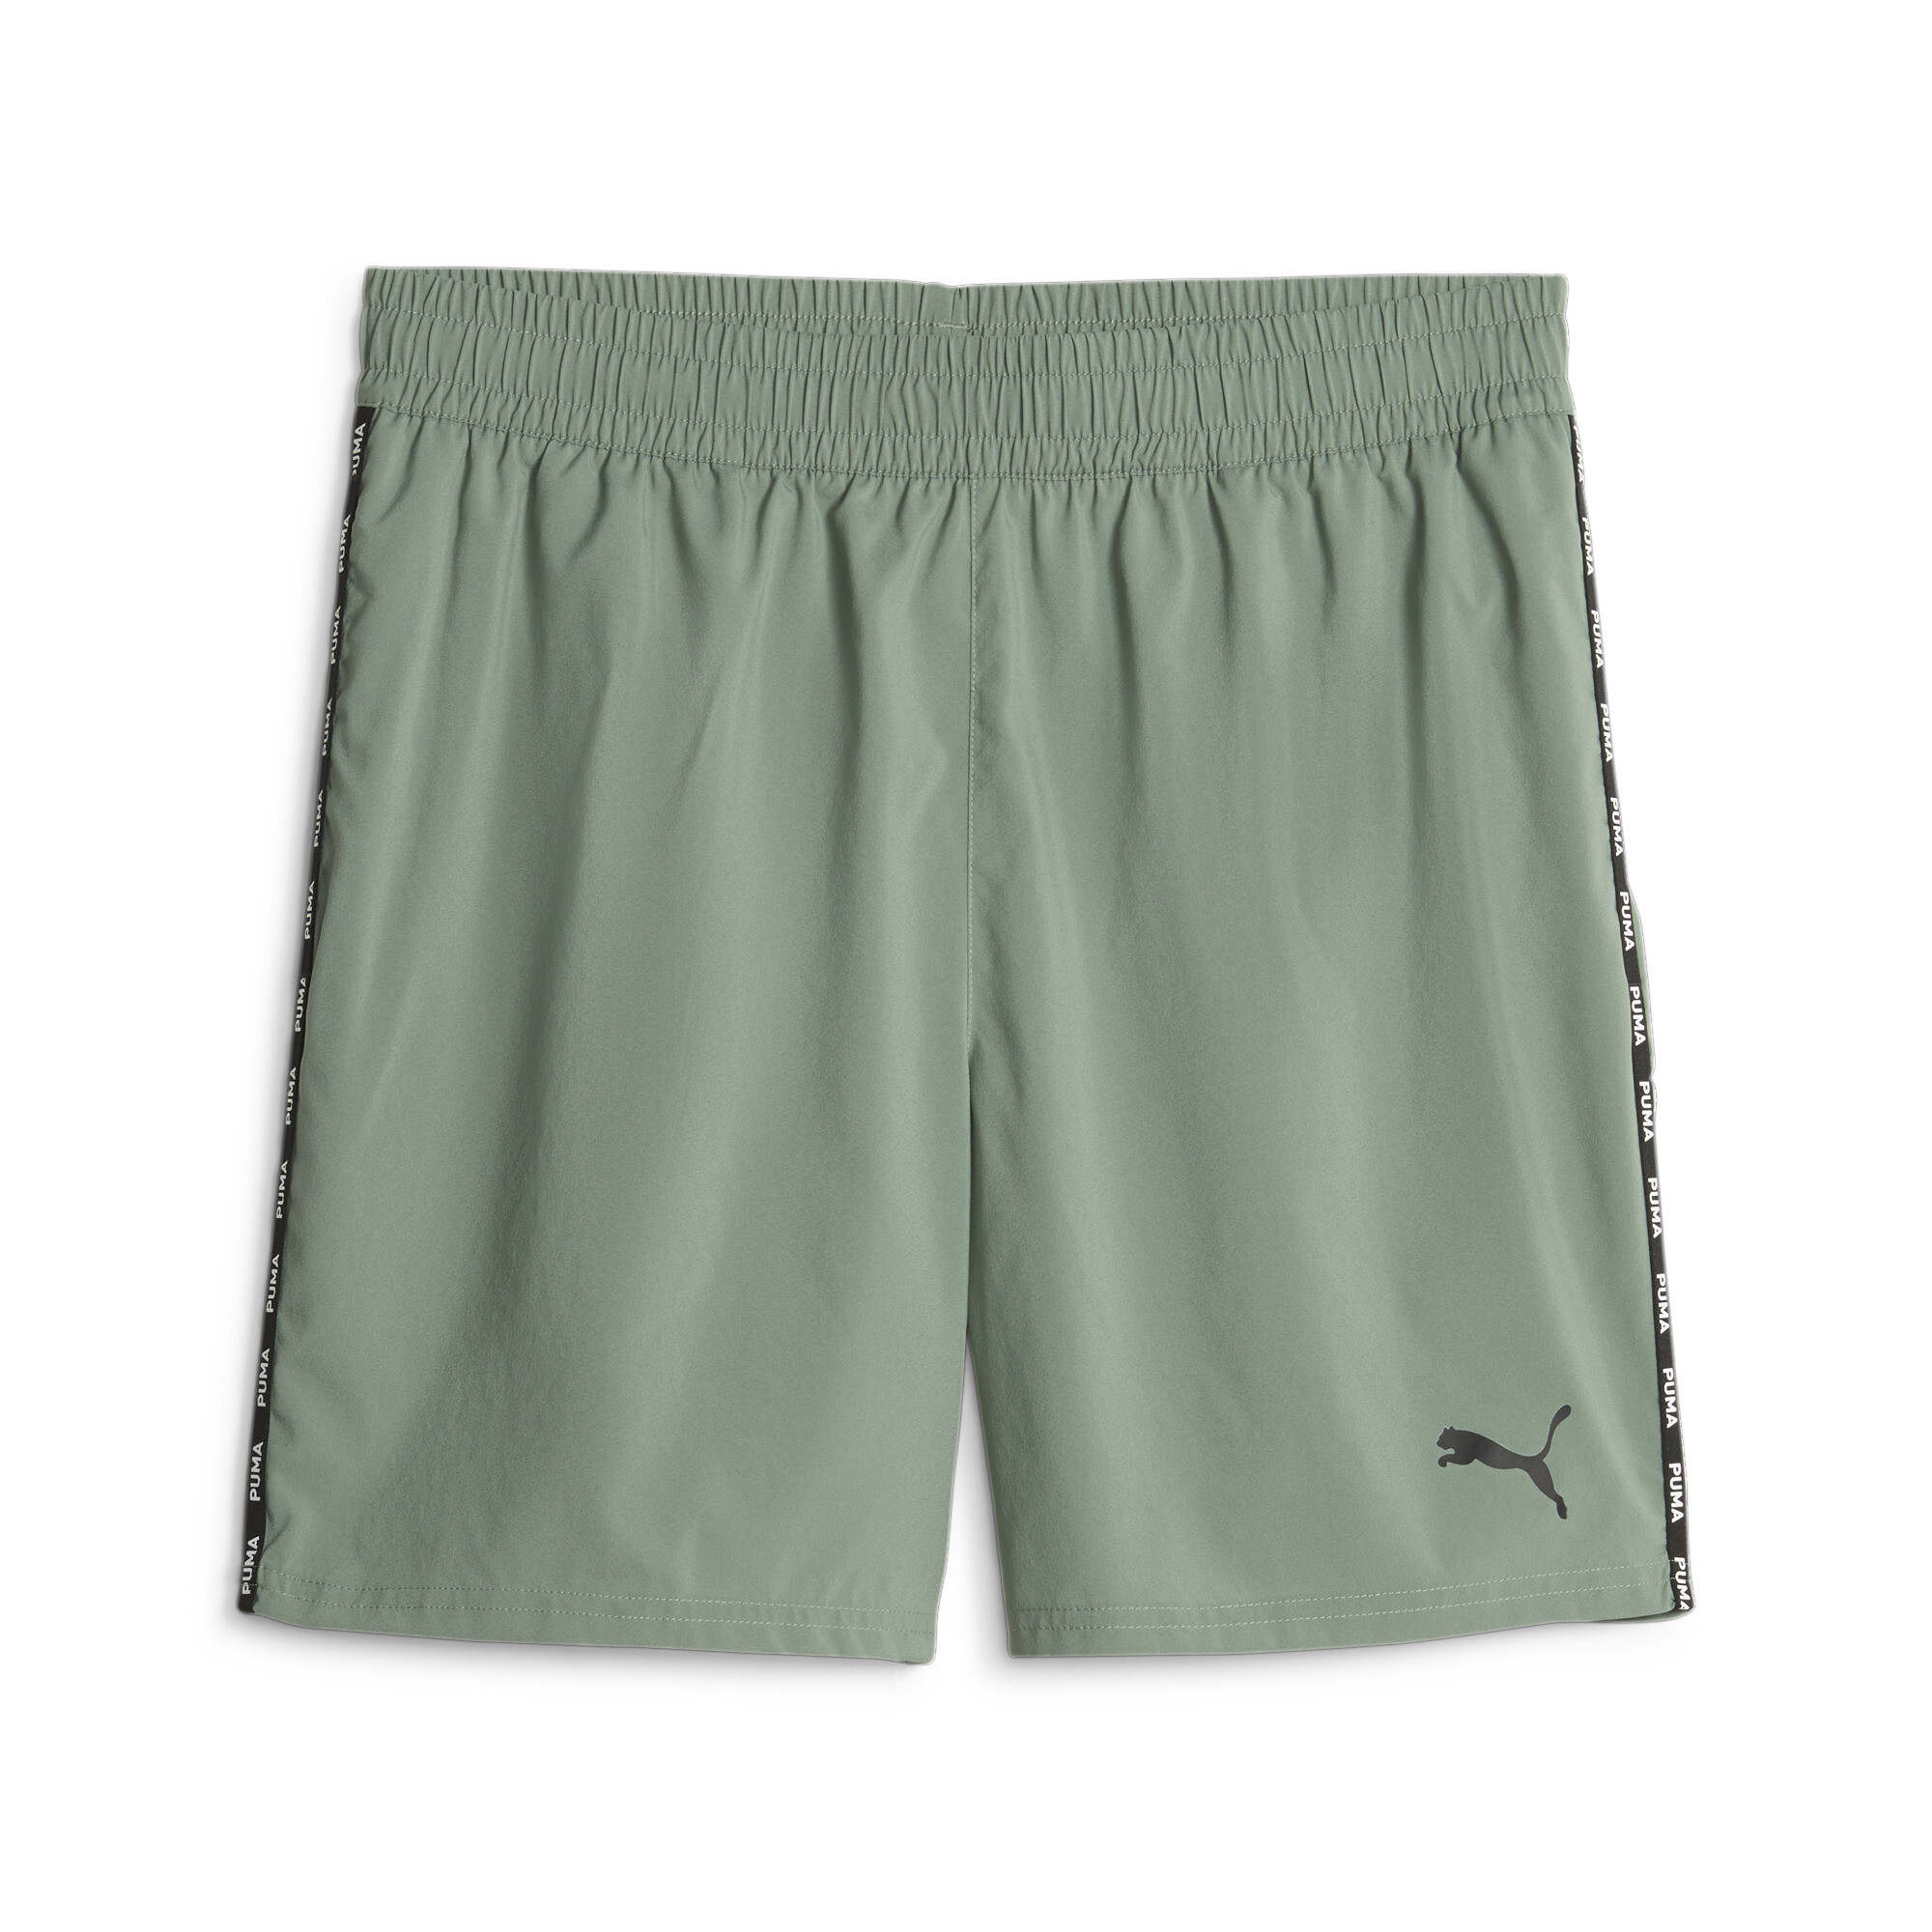 Men's PUMA Fit 7 Training Shorts In Green, Size Medium